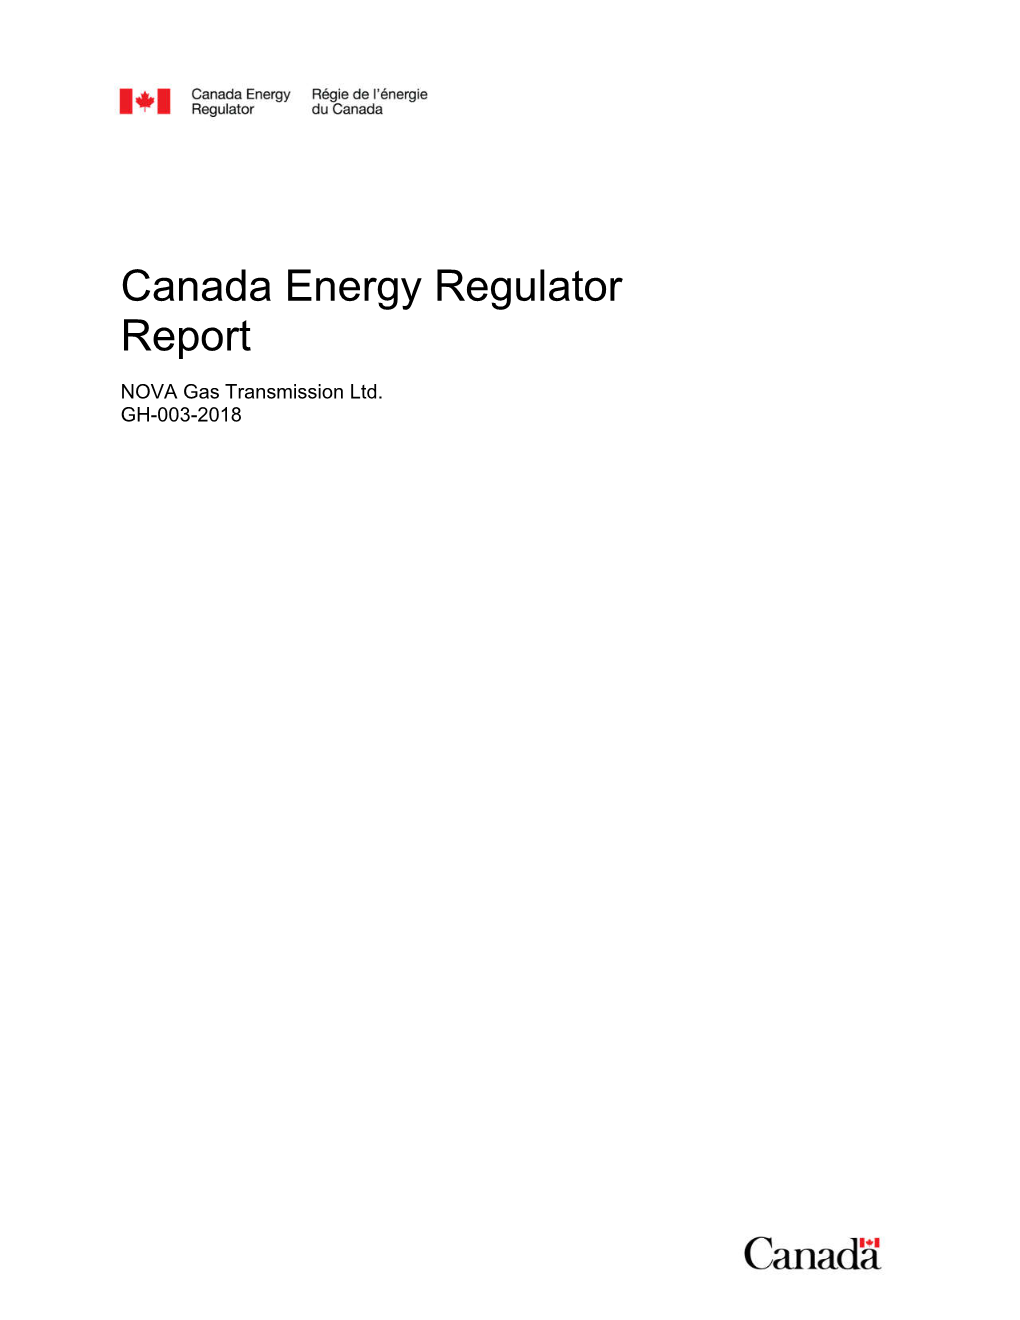 Canada Energy Regulator Report